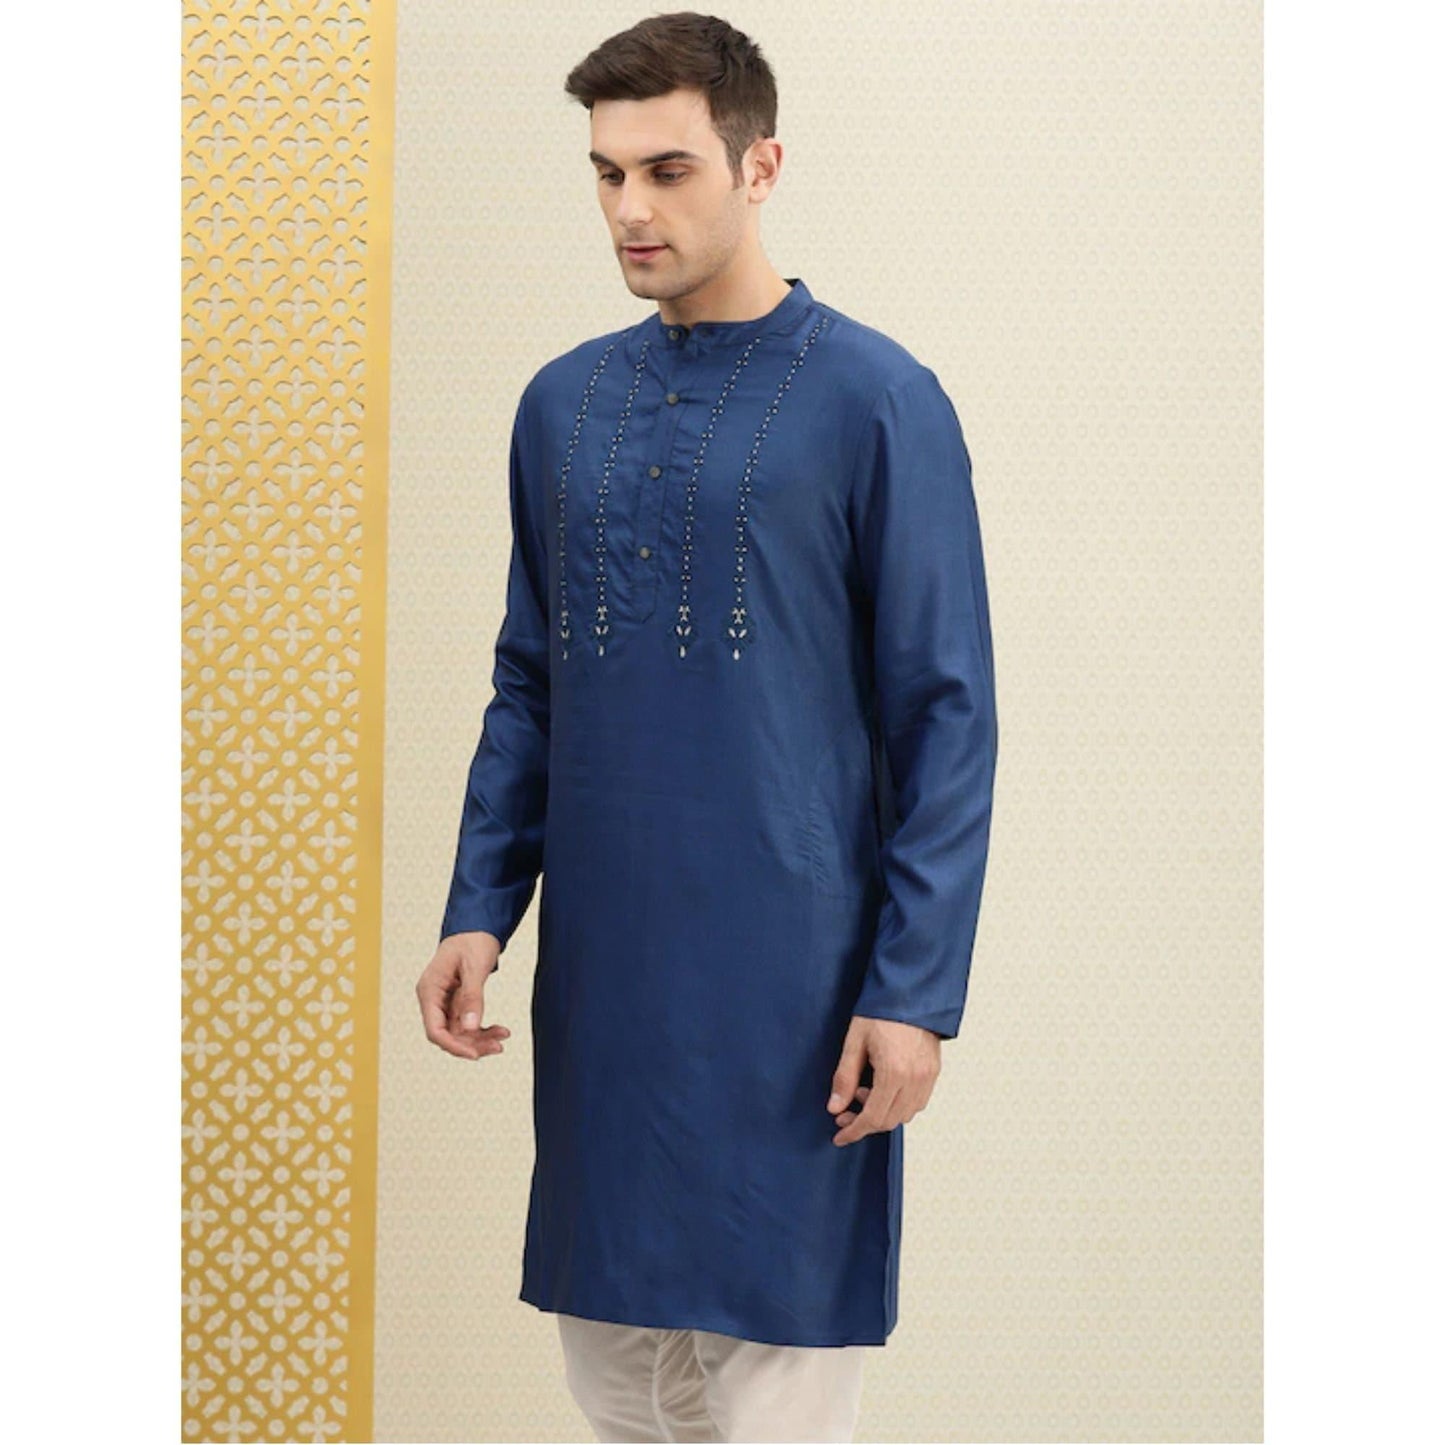 Custom made eid pakistani men embroidery kurta  pajama set , 100% cotton red kurta for men ,  Men traditional wear , Indian shirt for men